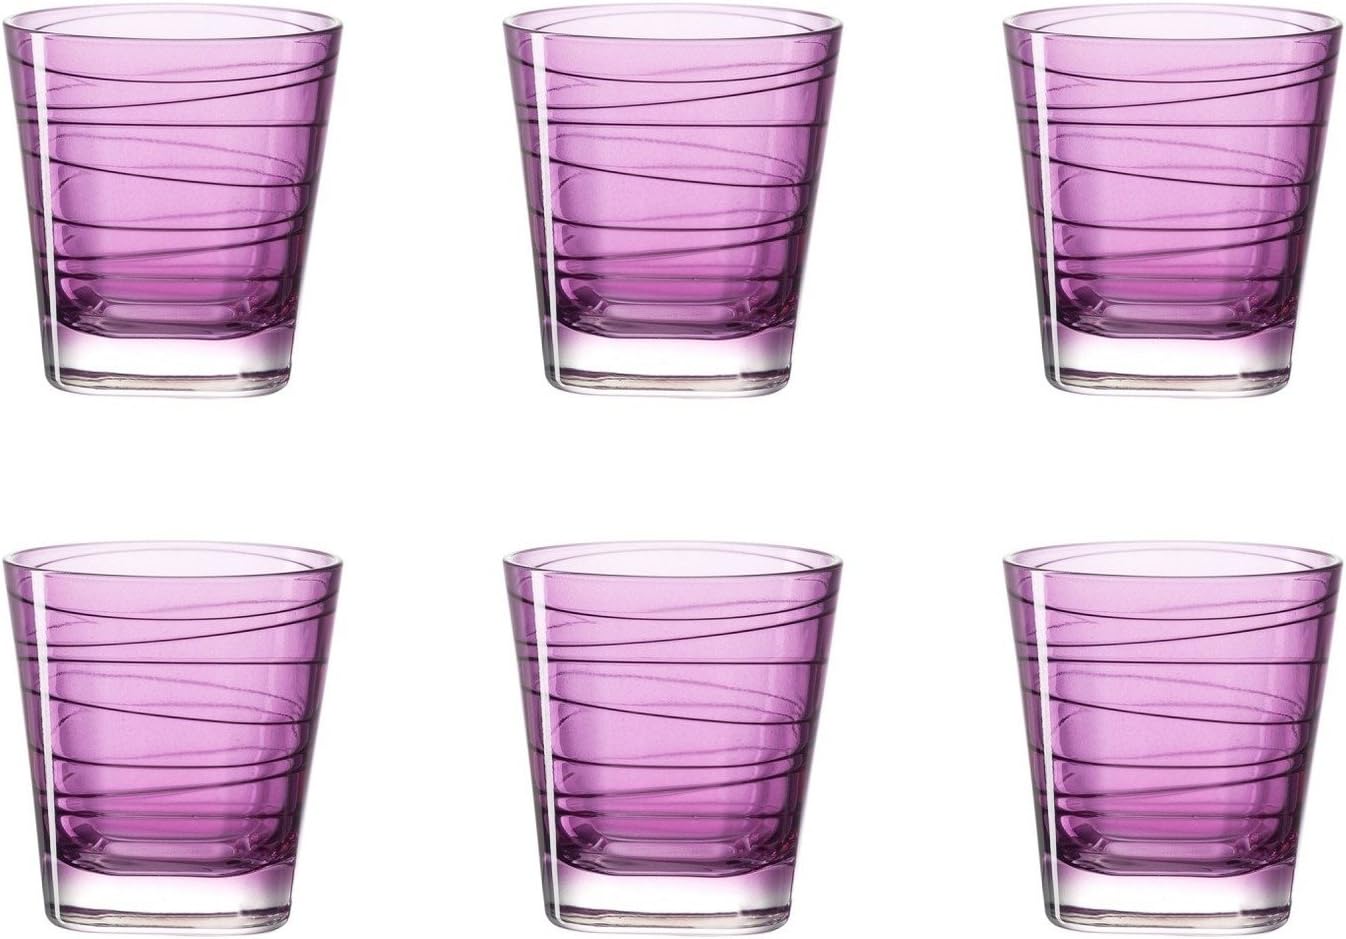 Leonardo drinkware glasses, 250 ml